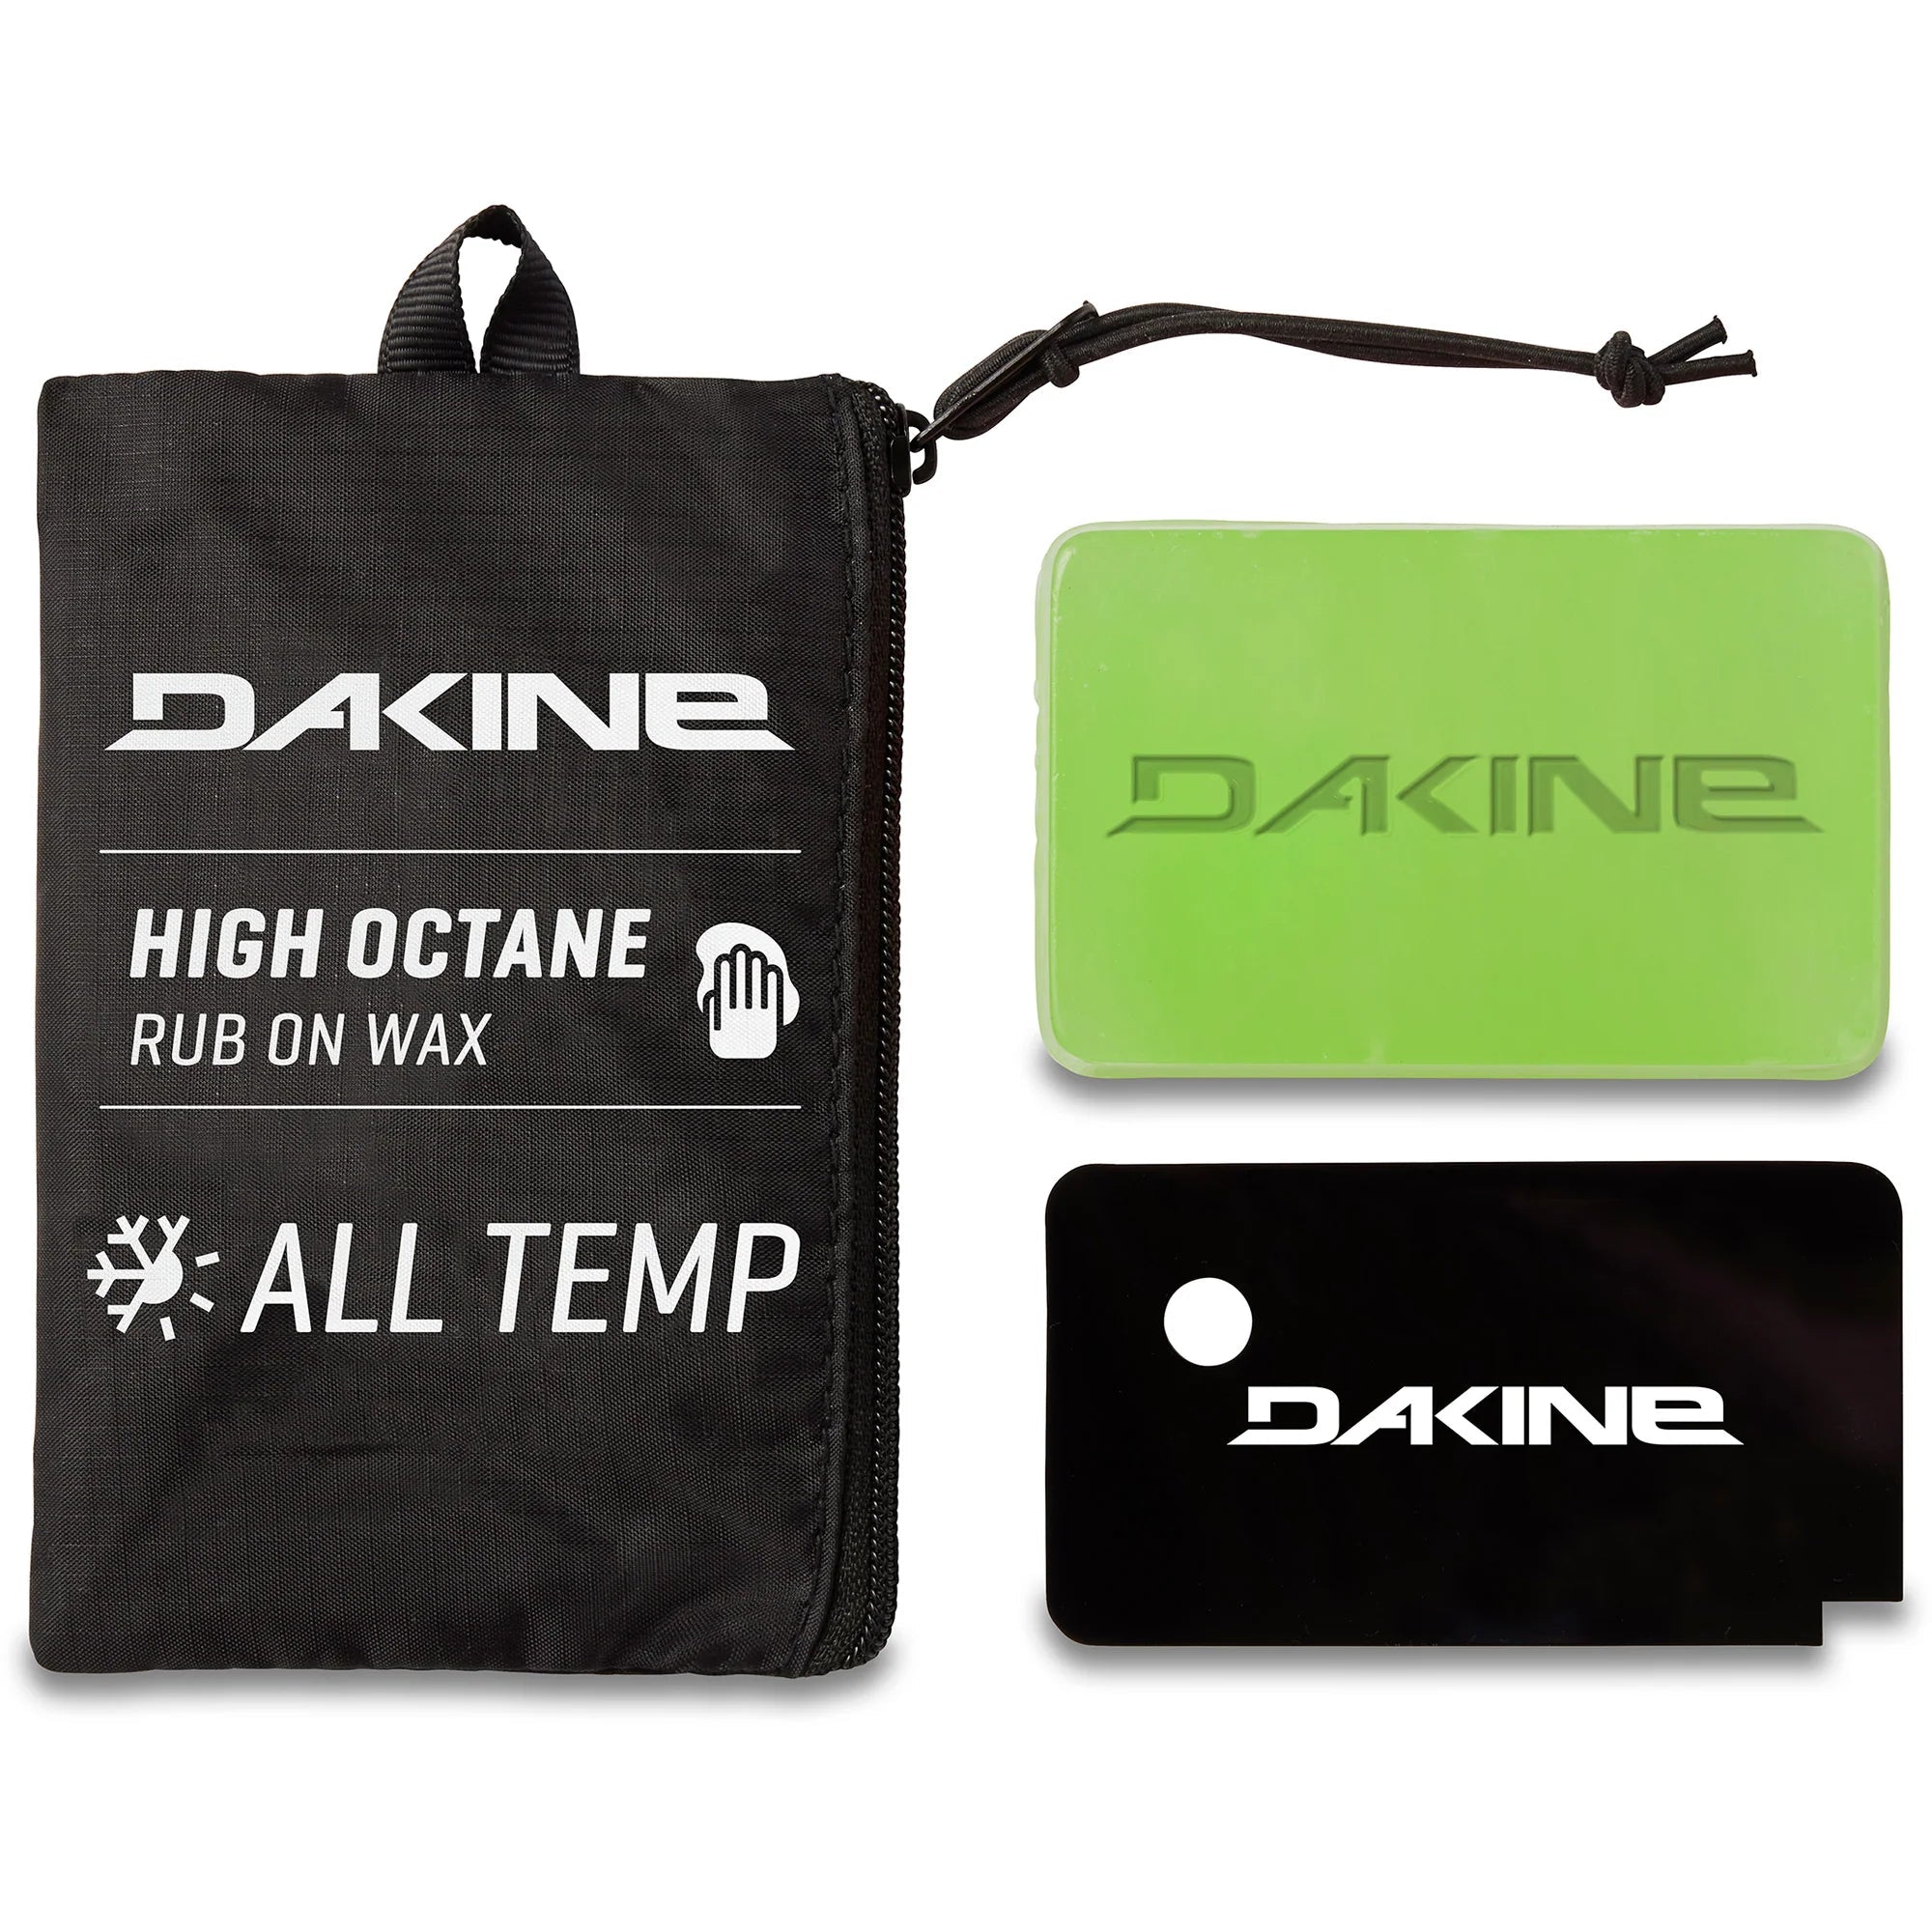 DAKINE High Octane Rub On Wax Assorted Snowboard Wax Dakine 